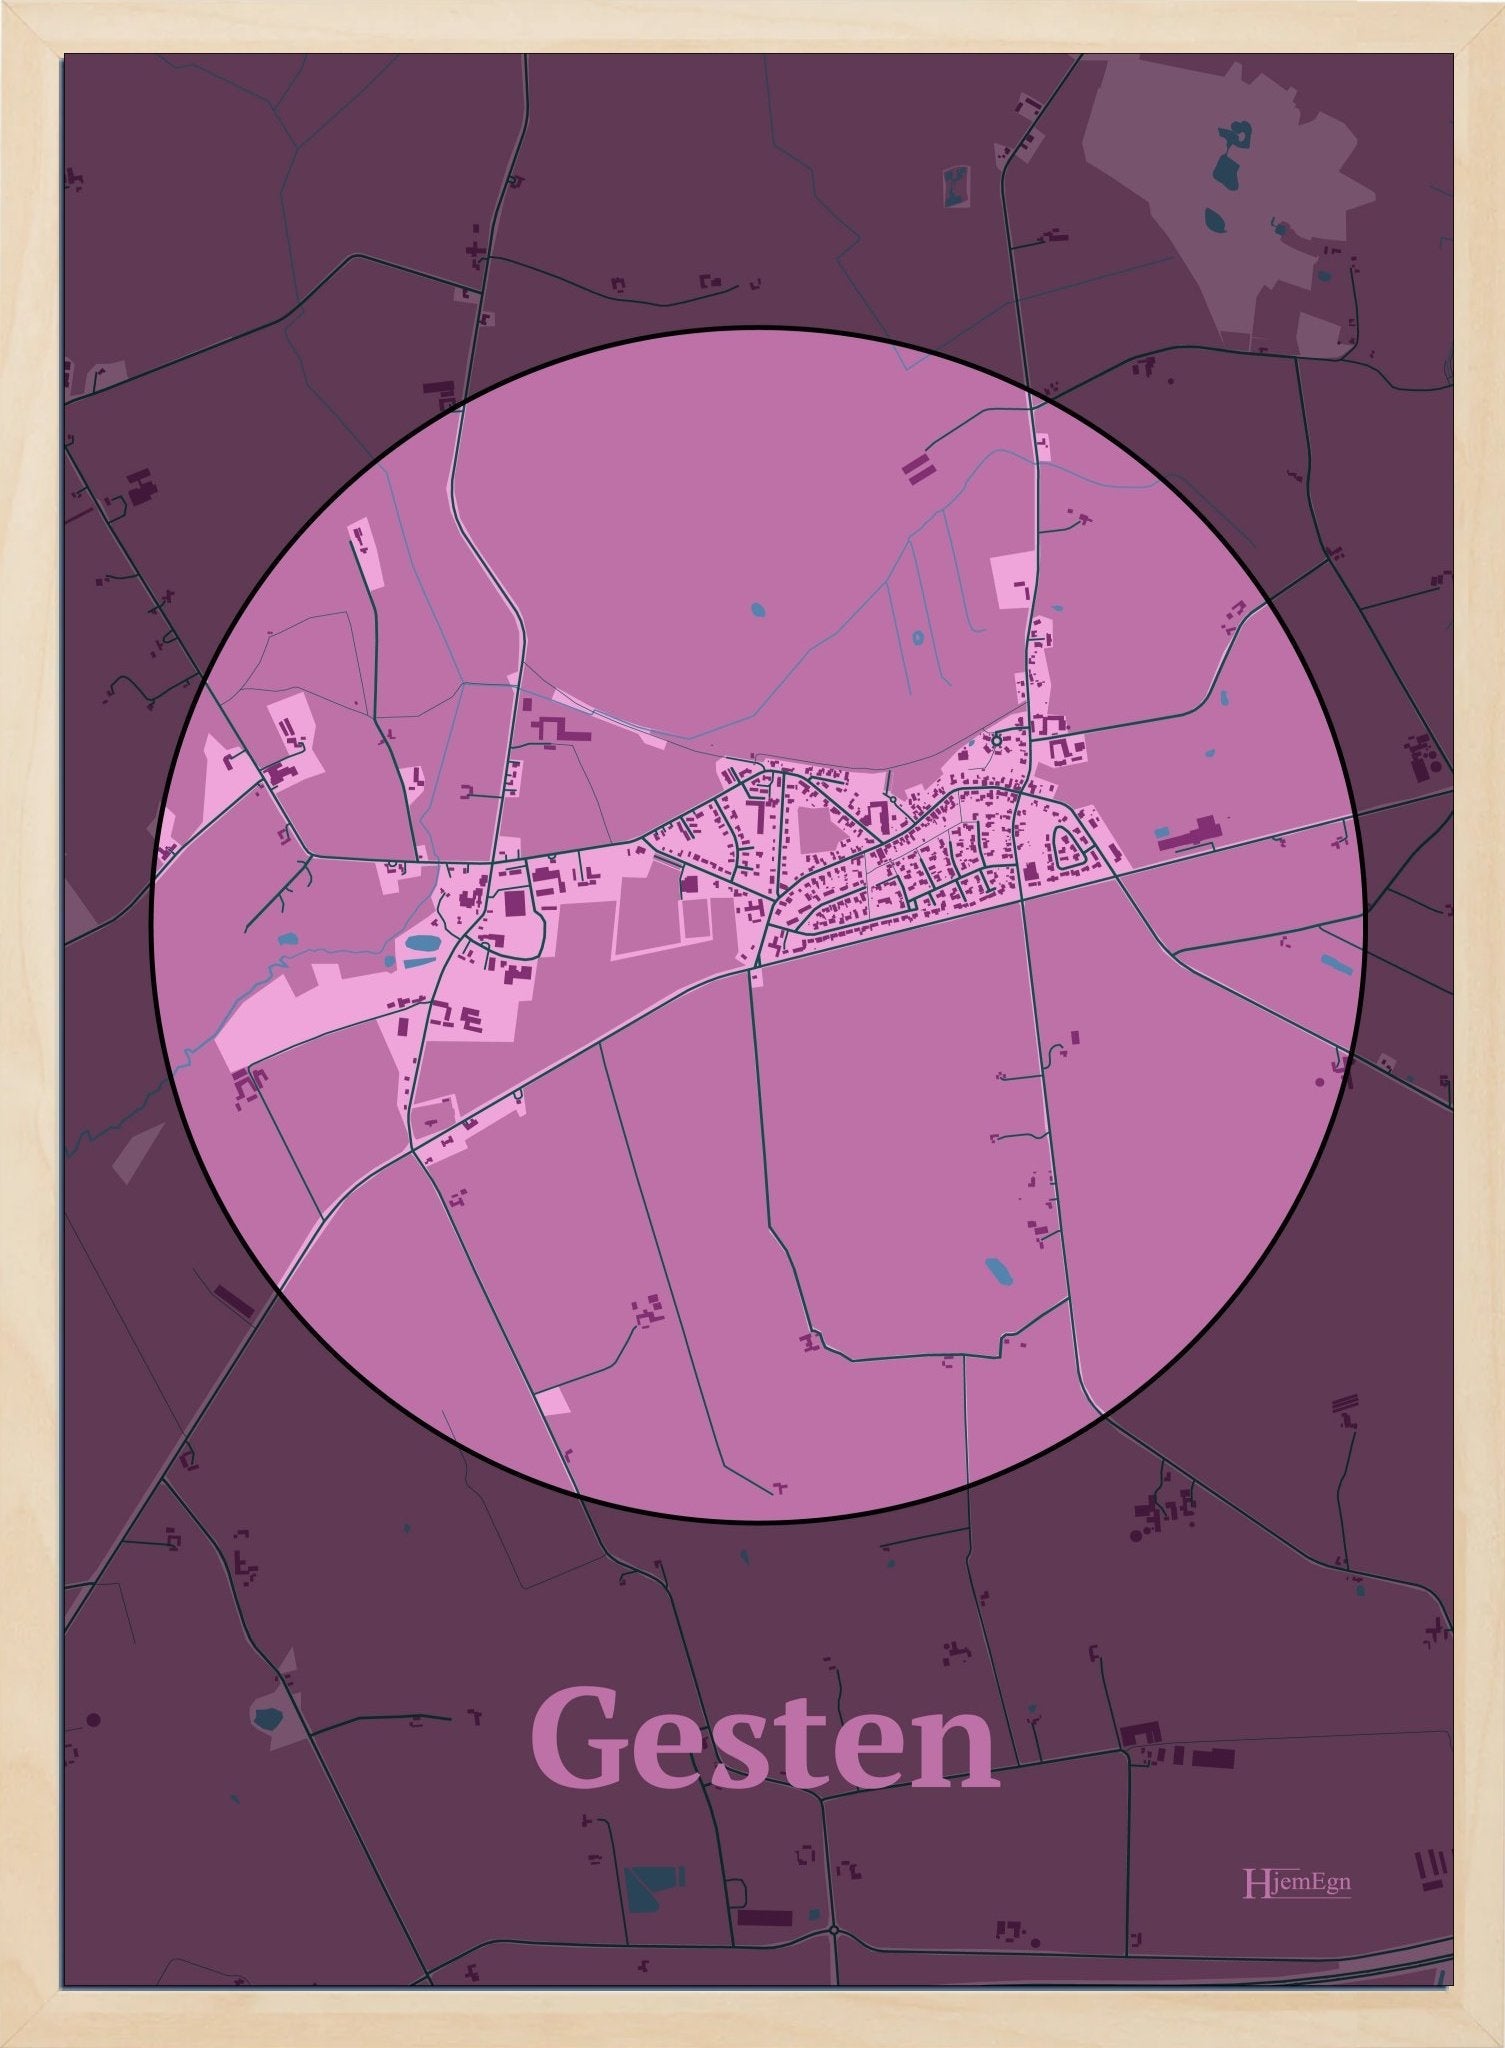 Gesten plakat i farve pastel rød og HjemEgn.dk design centrum. Design bykort for Gesten